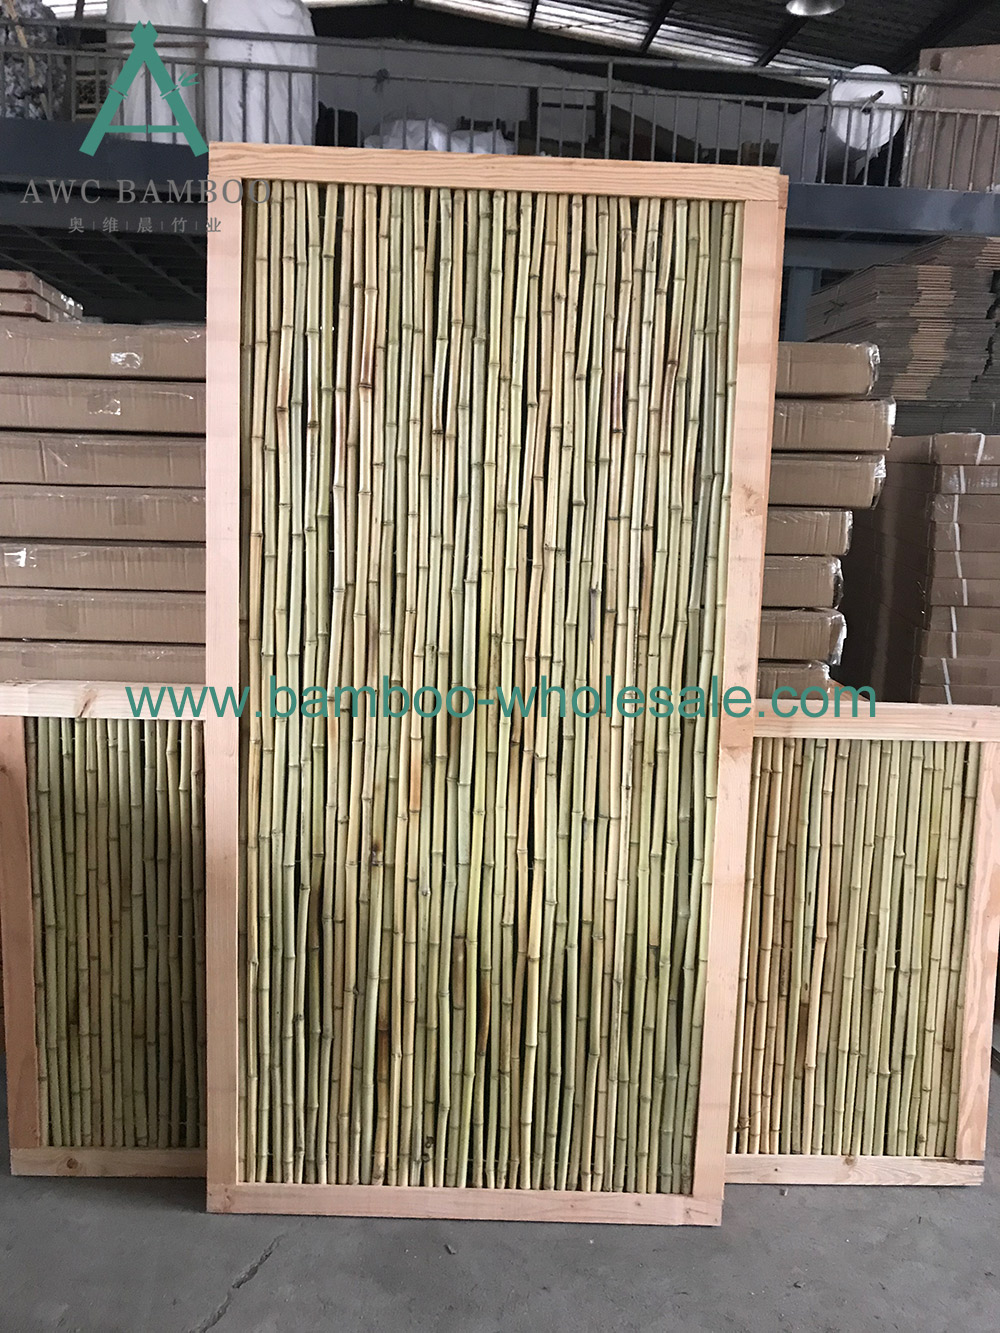 Bamboo Wood Fence